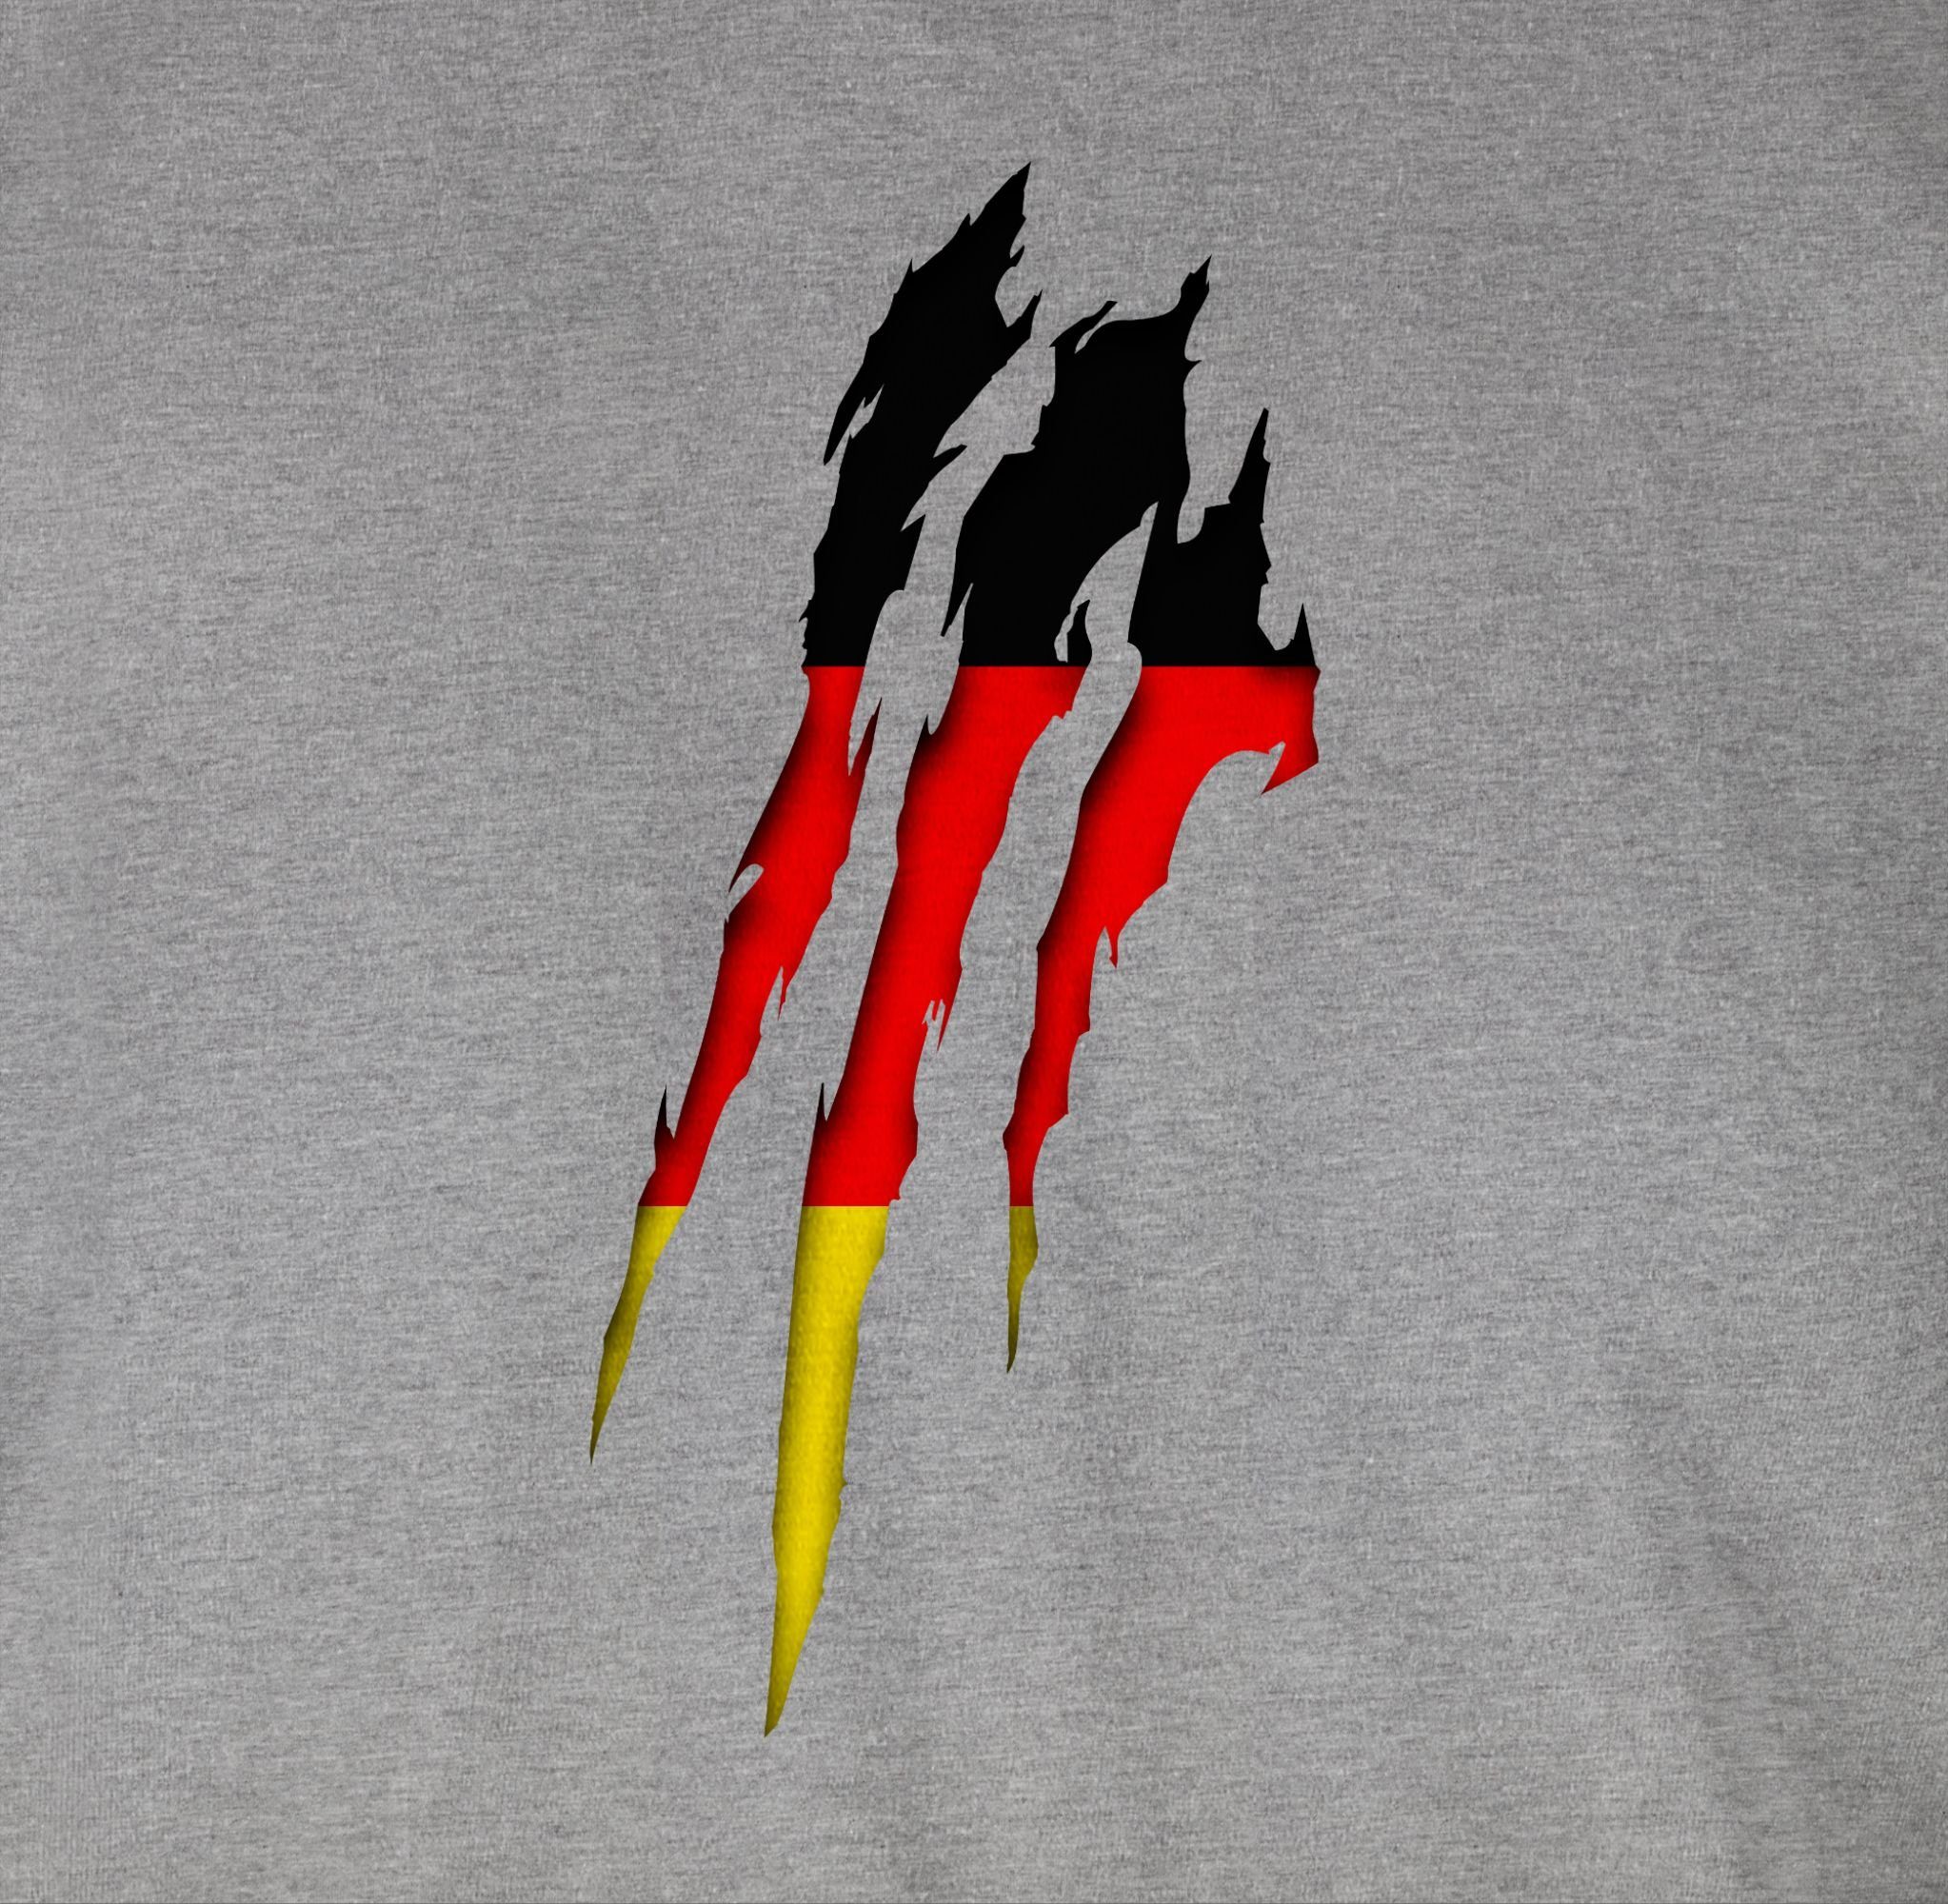 Deutschland Grau Shirtracer meliert T-Shirt Wappen Länder Krallenspuren 3